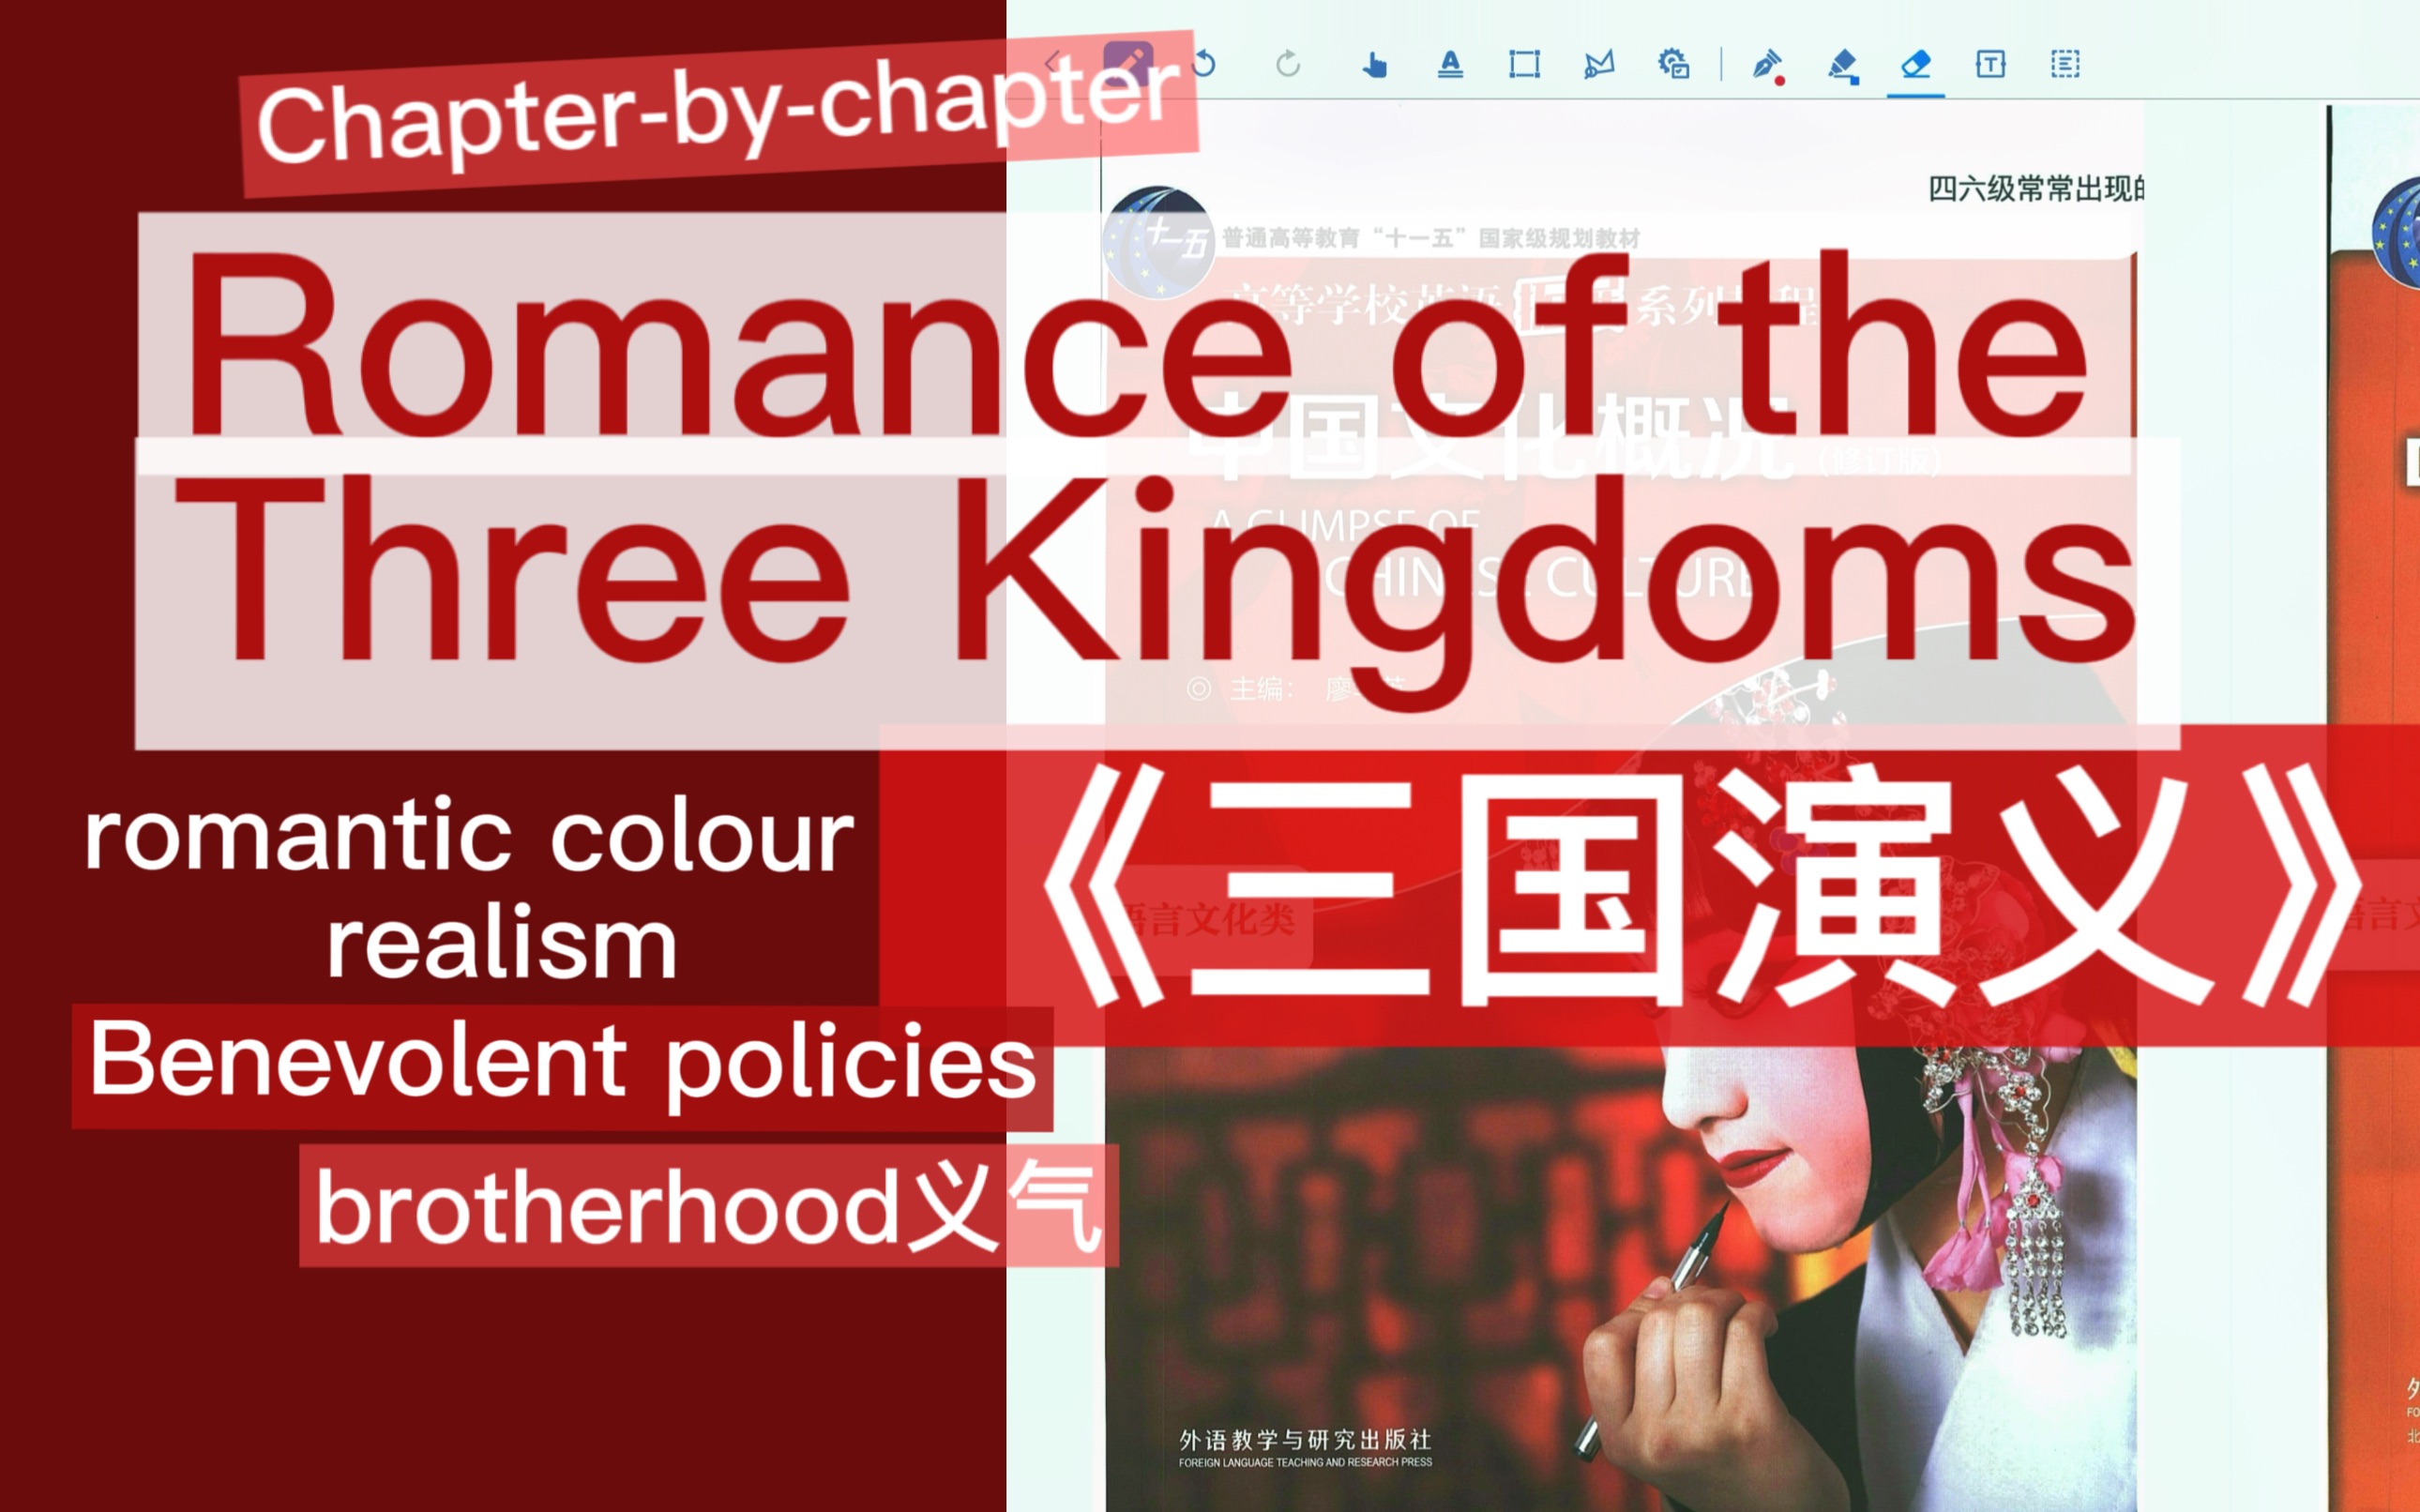 中国文化概况/chapter2-三国演义 The Romance of the Three Kingdoms